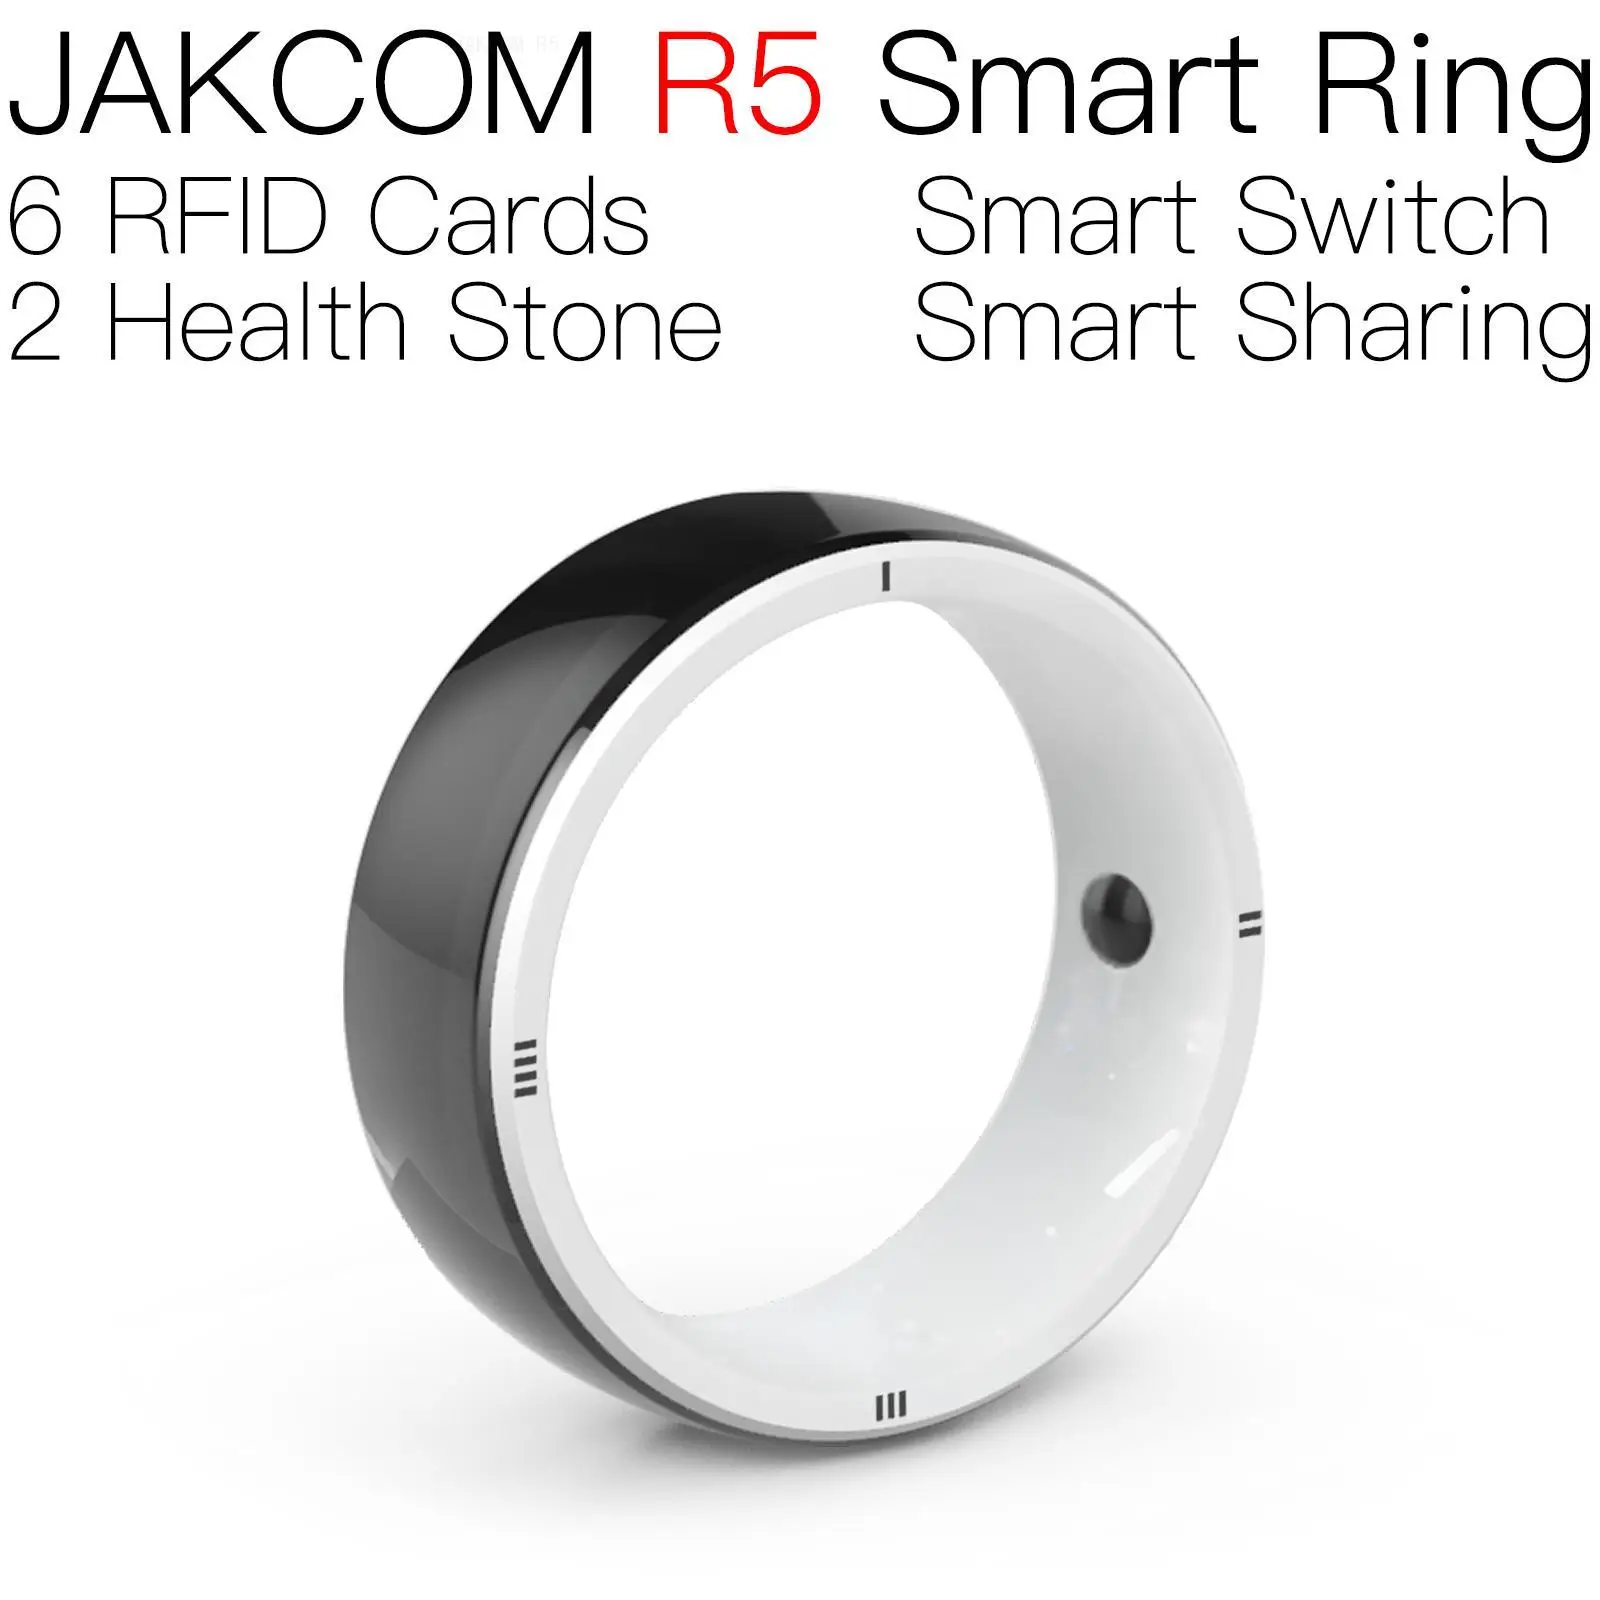 

JAKCOM R5 Smart Ring Match to chip for door nfc set ic card blank mf uid stms207 jordan flight 4 ntag213 125 pcs rfid t5577